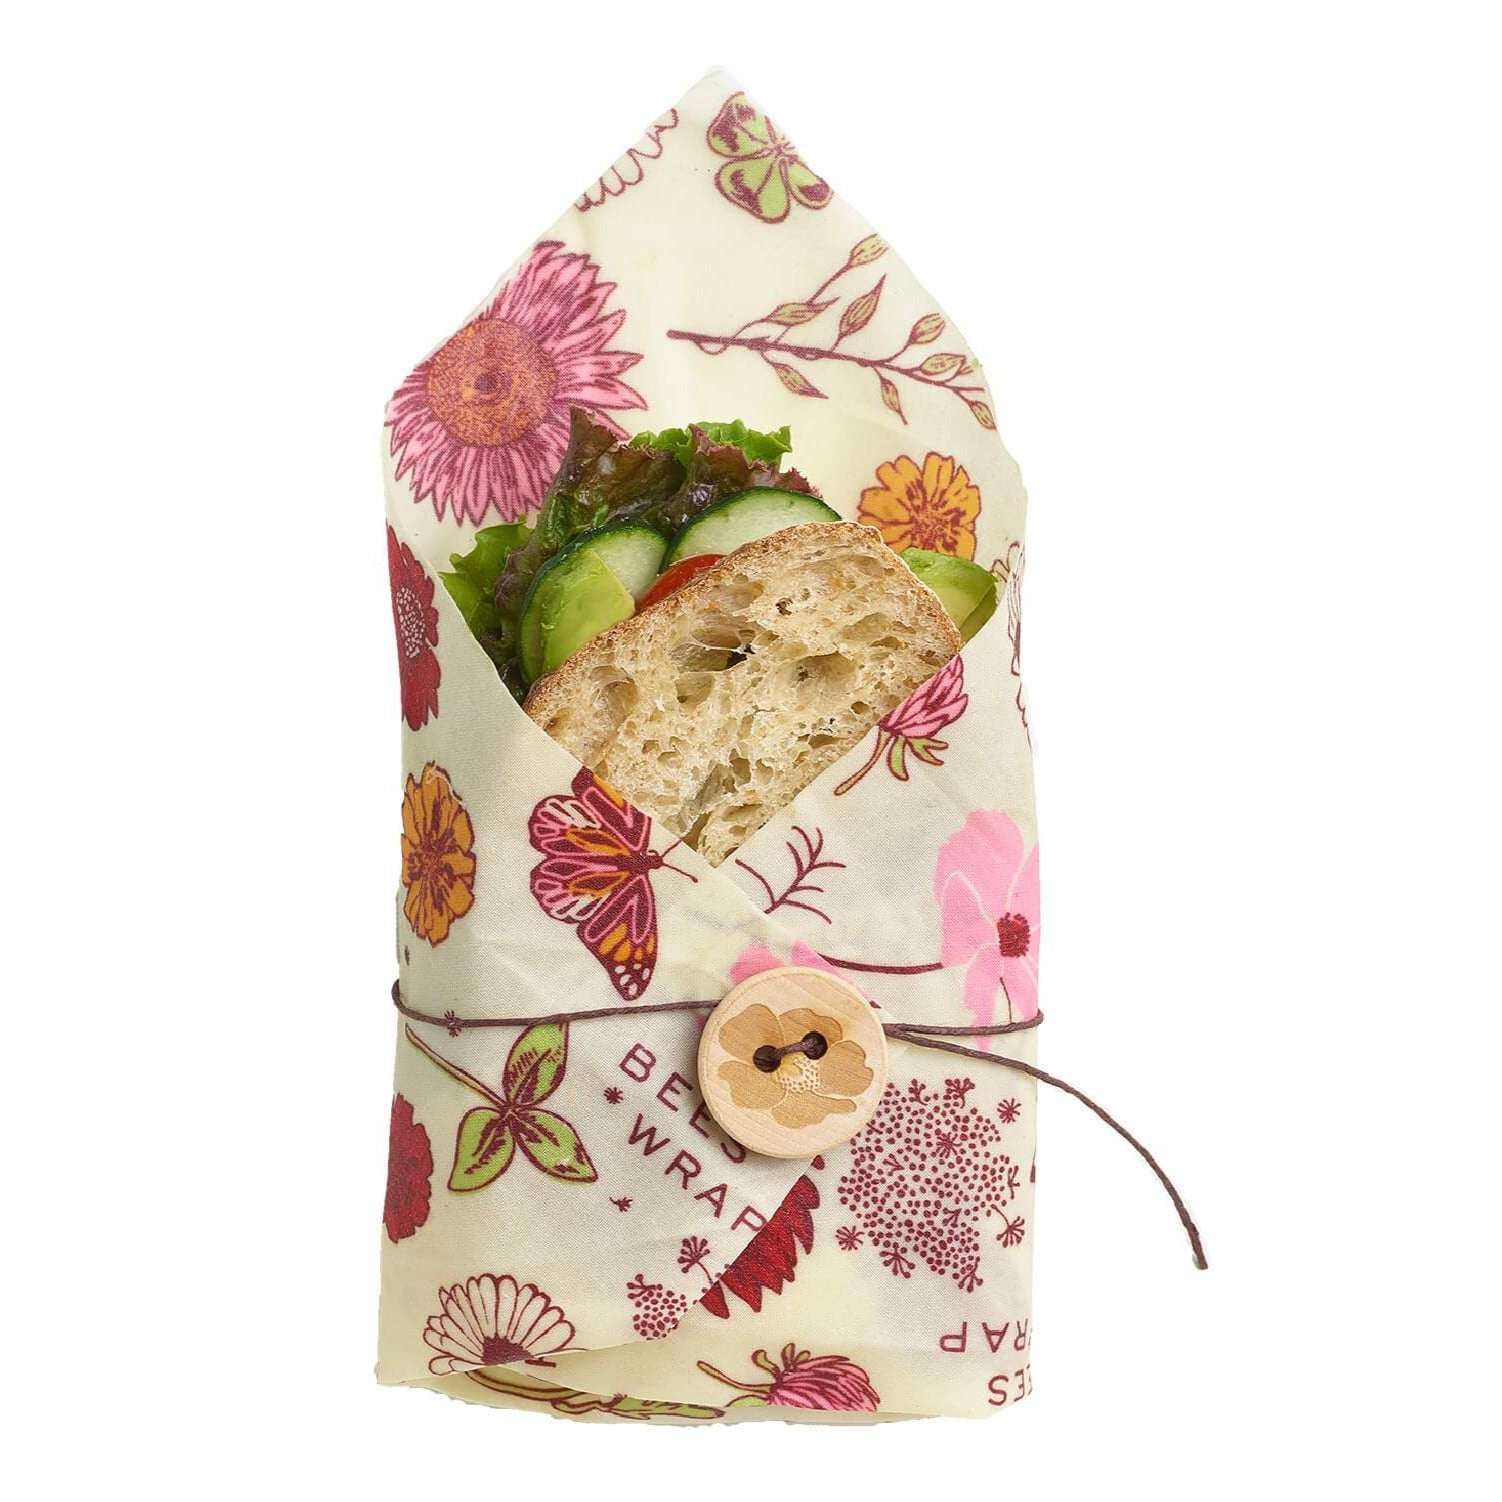 vegan sandwich beeswax wrap with sandwich